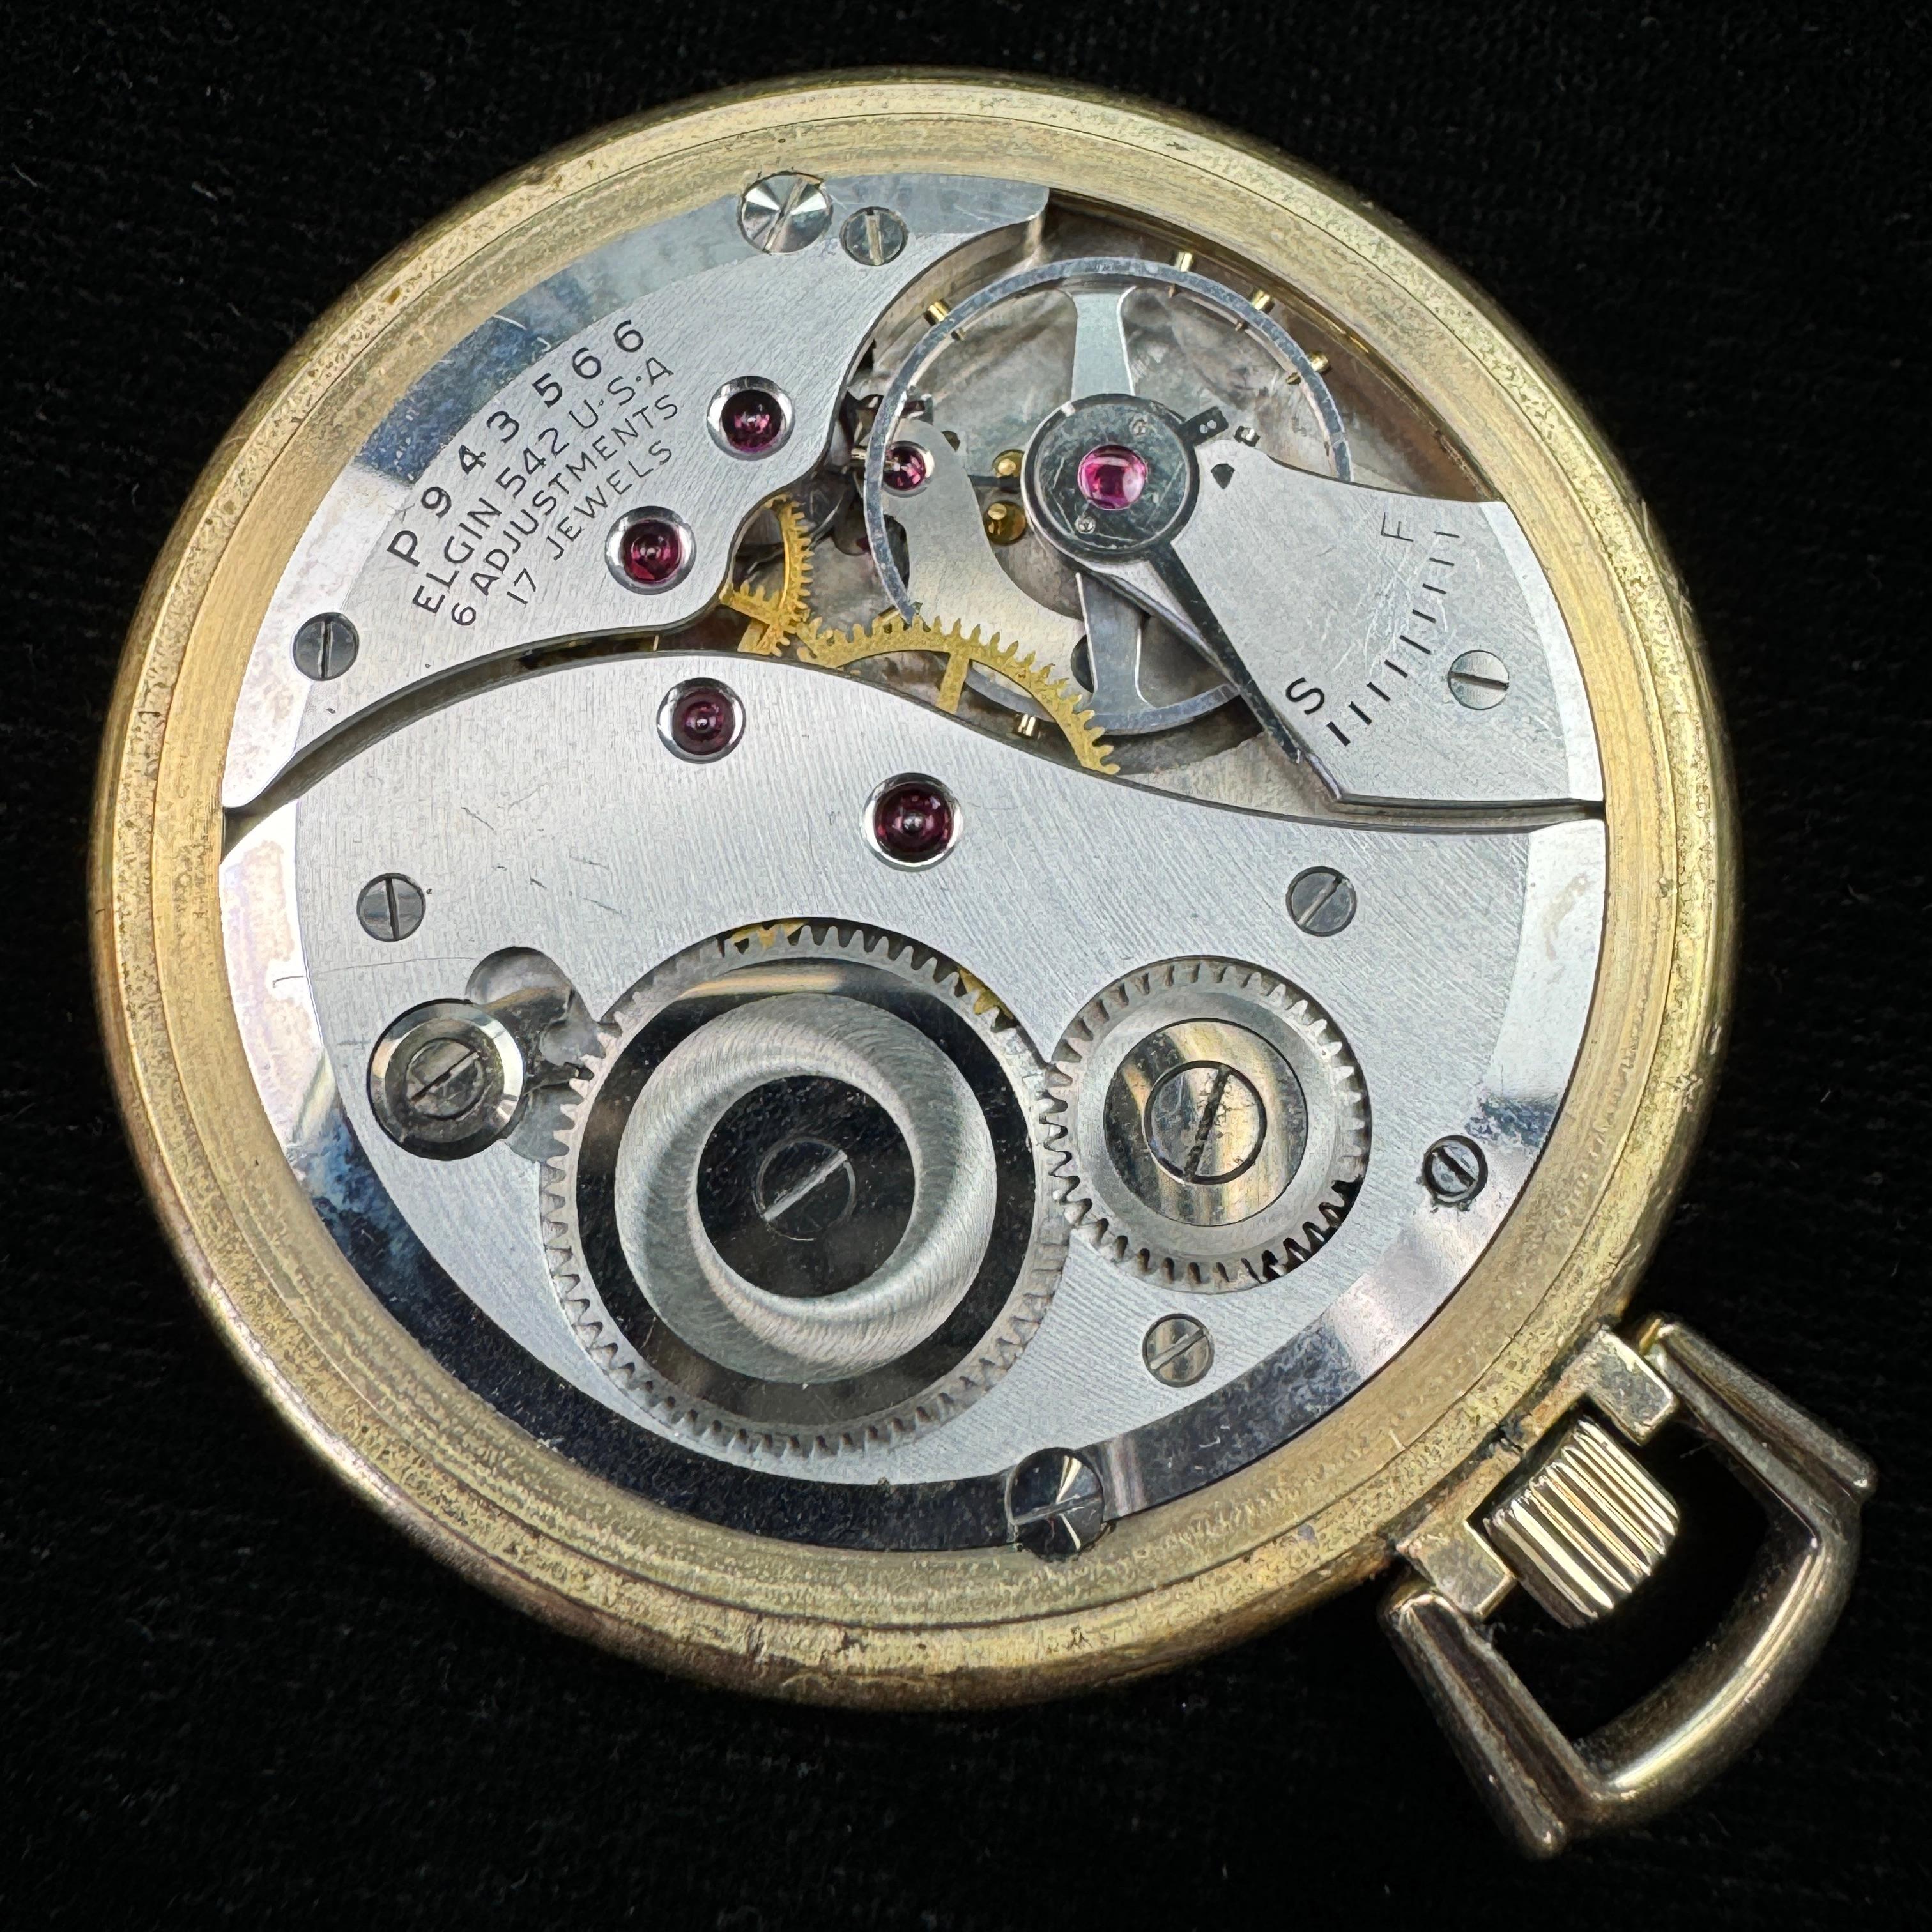 Circa 1951 17-jewel Elgin De Luxe model 5 open face pocket watch